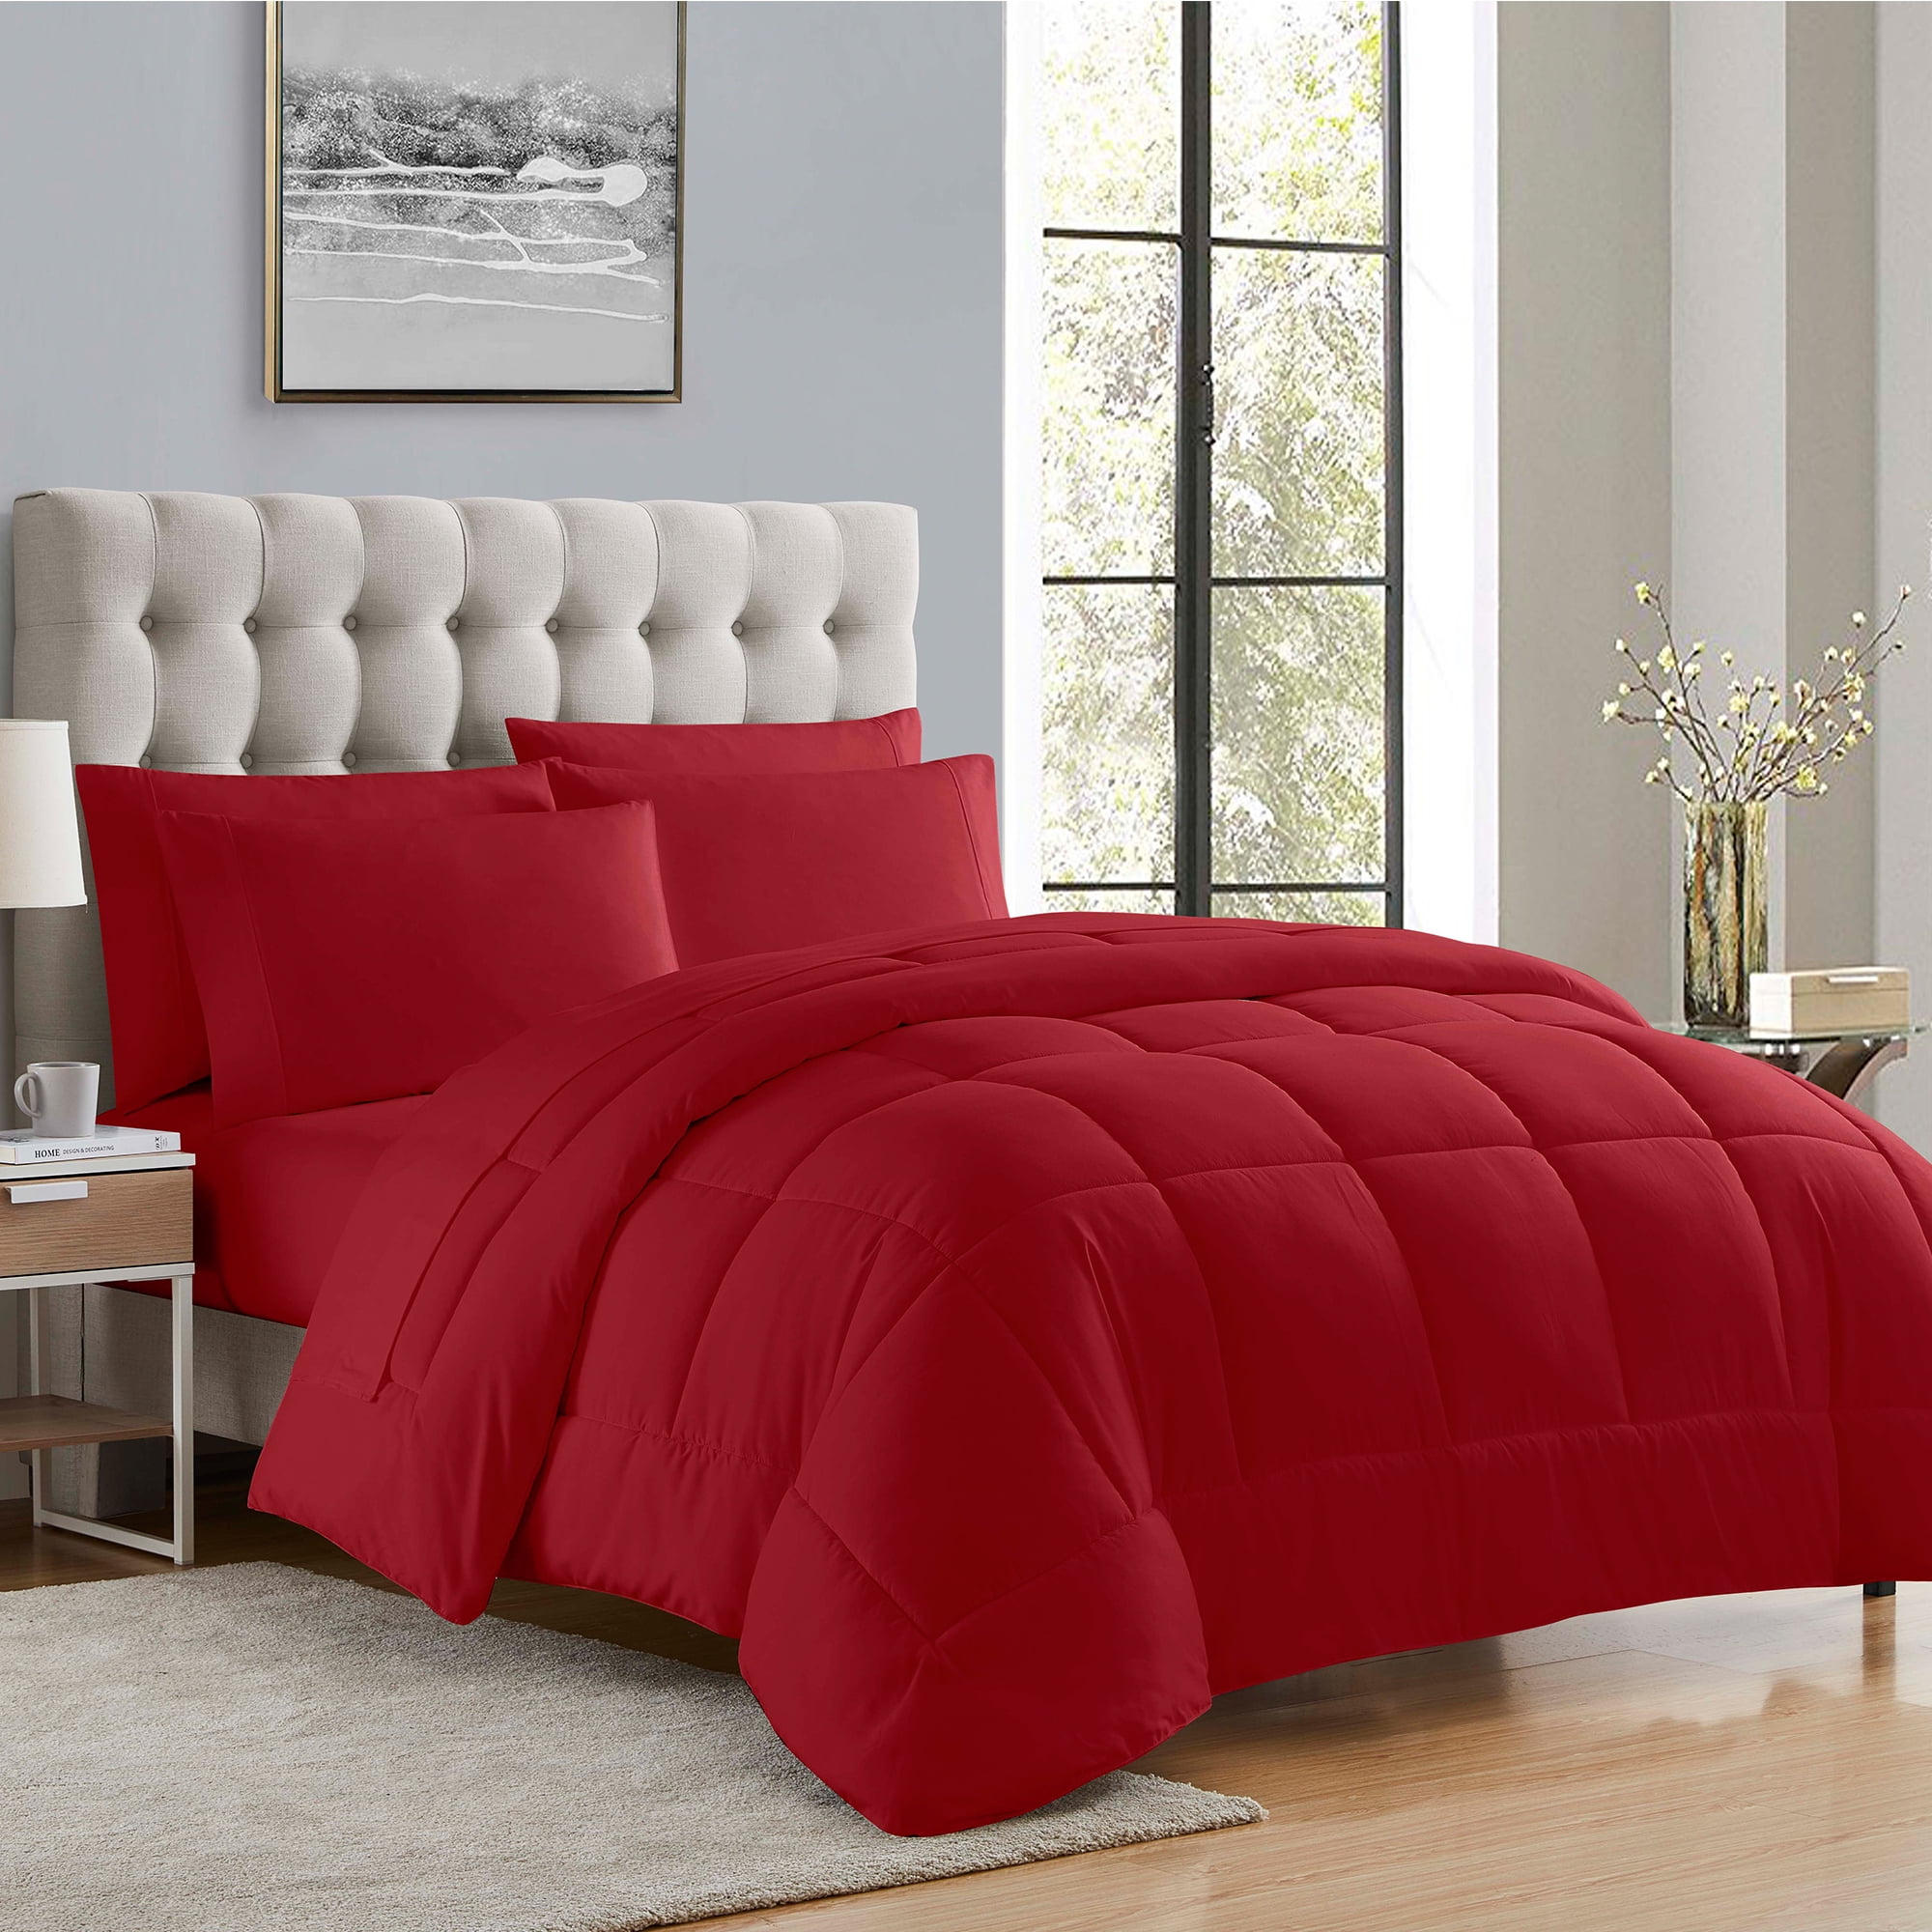 Luxury 5 Piece Beautiful Bedspread /Diamond Reversible Comforter set Red/Burduny 